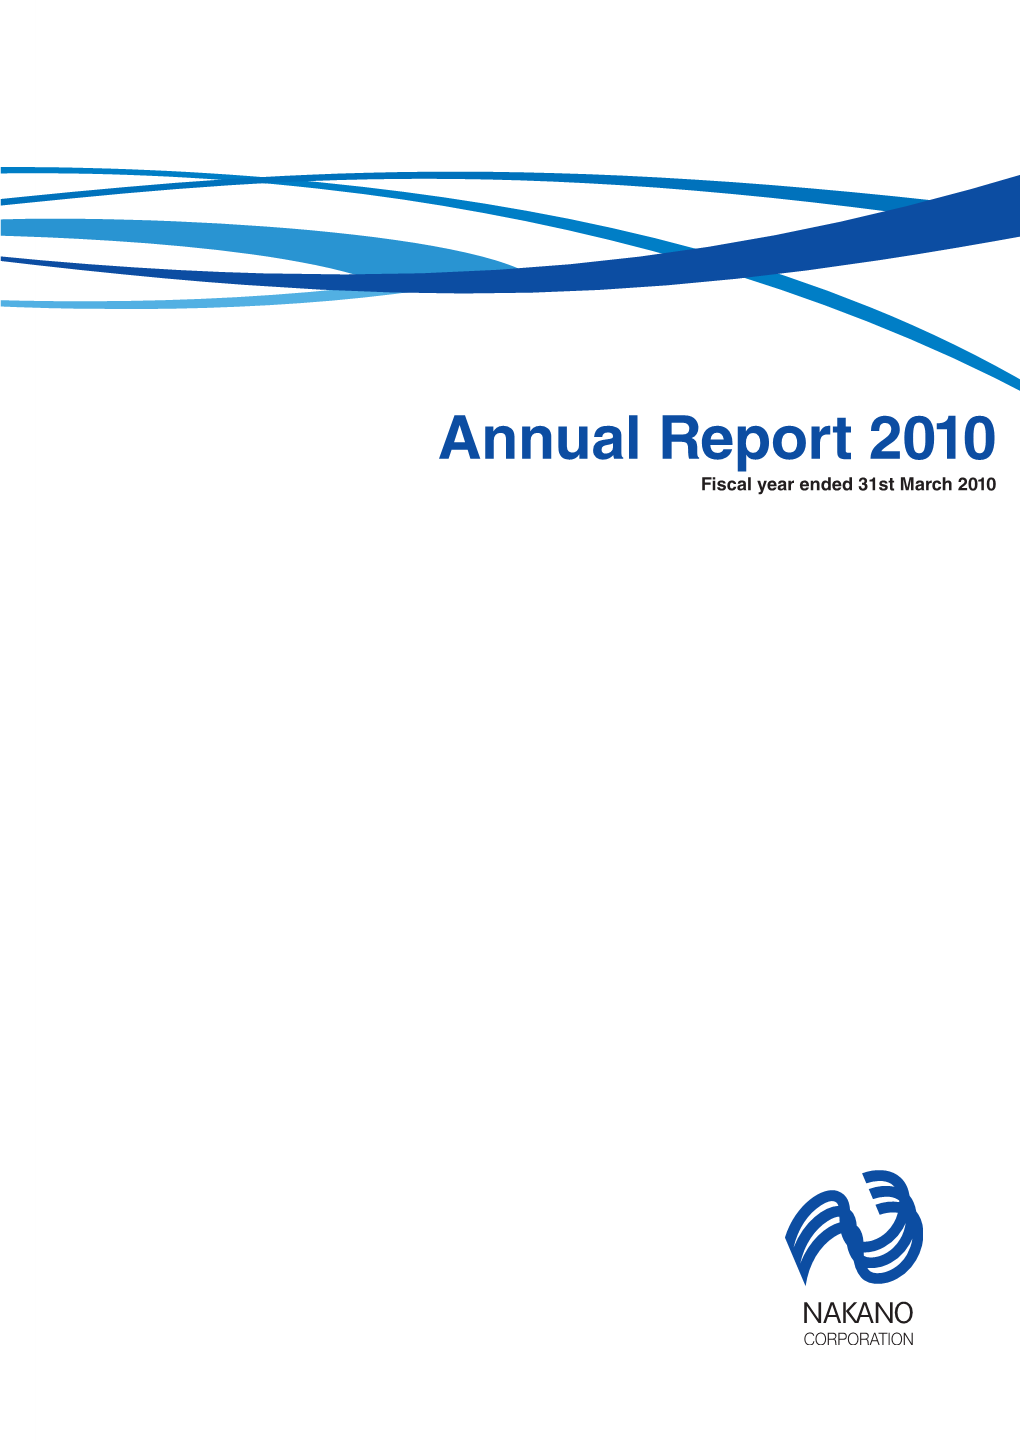 NAKANO CORPORATION Annual Report 2010